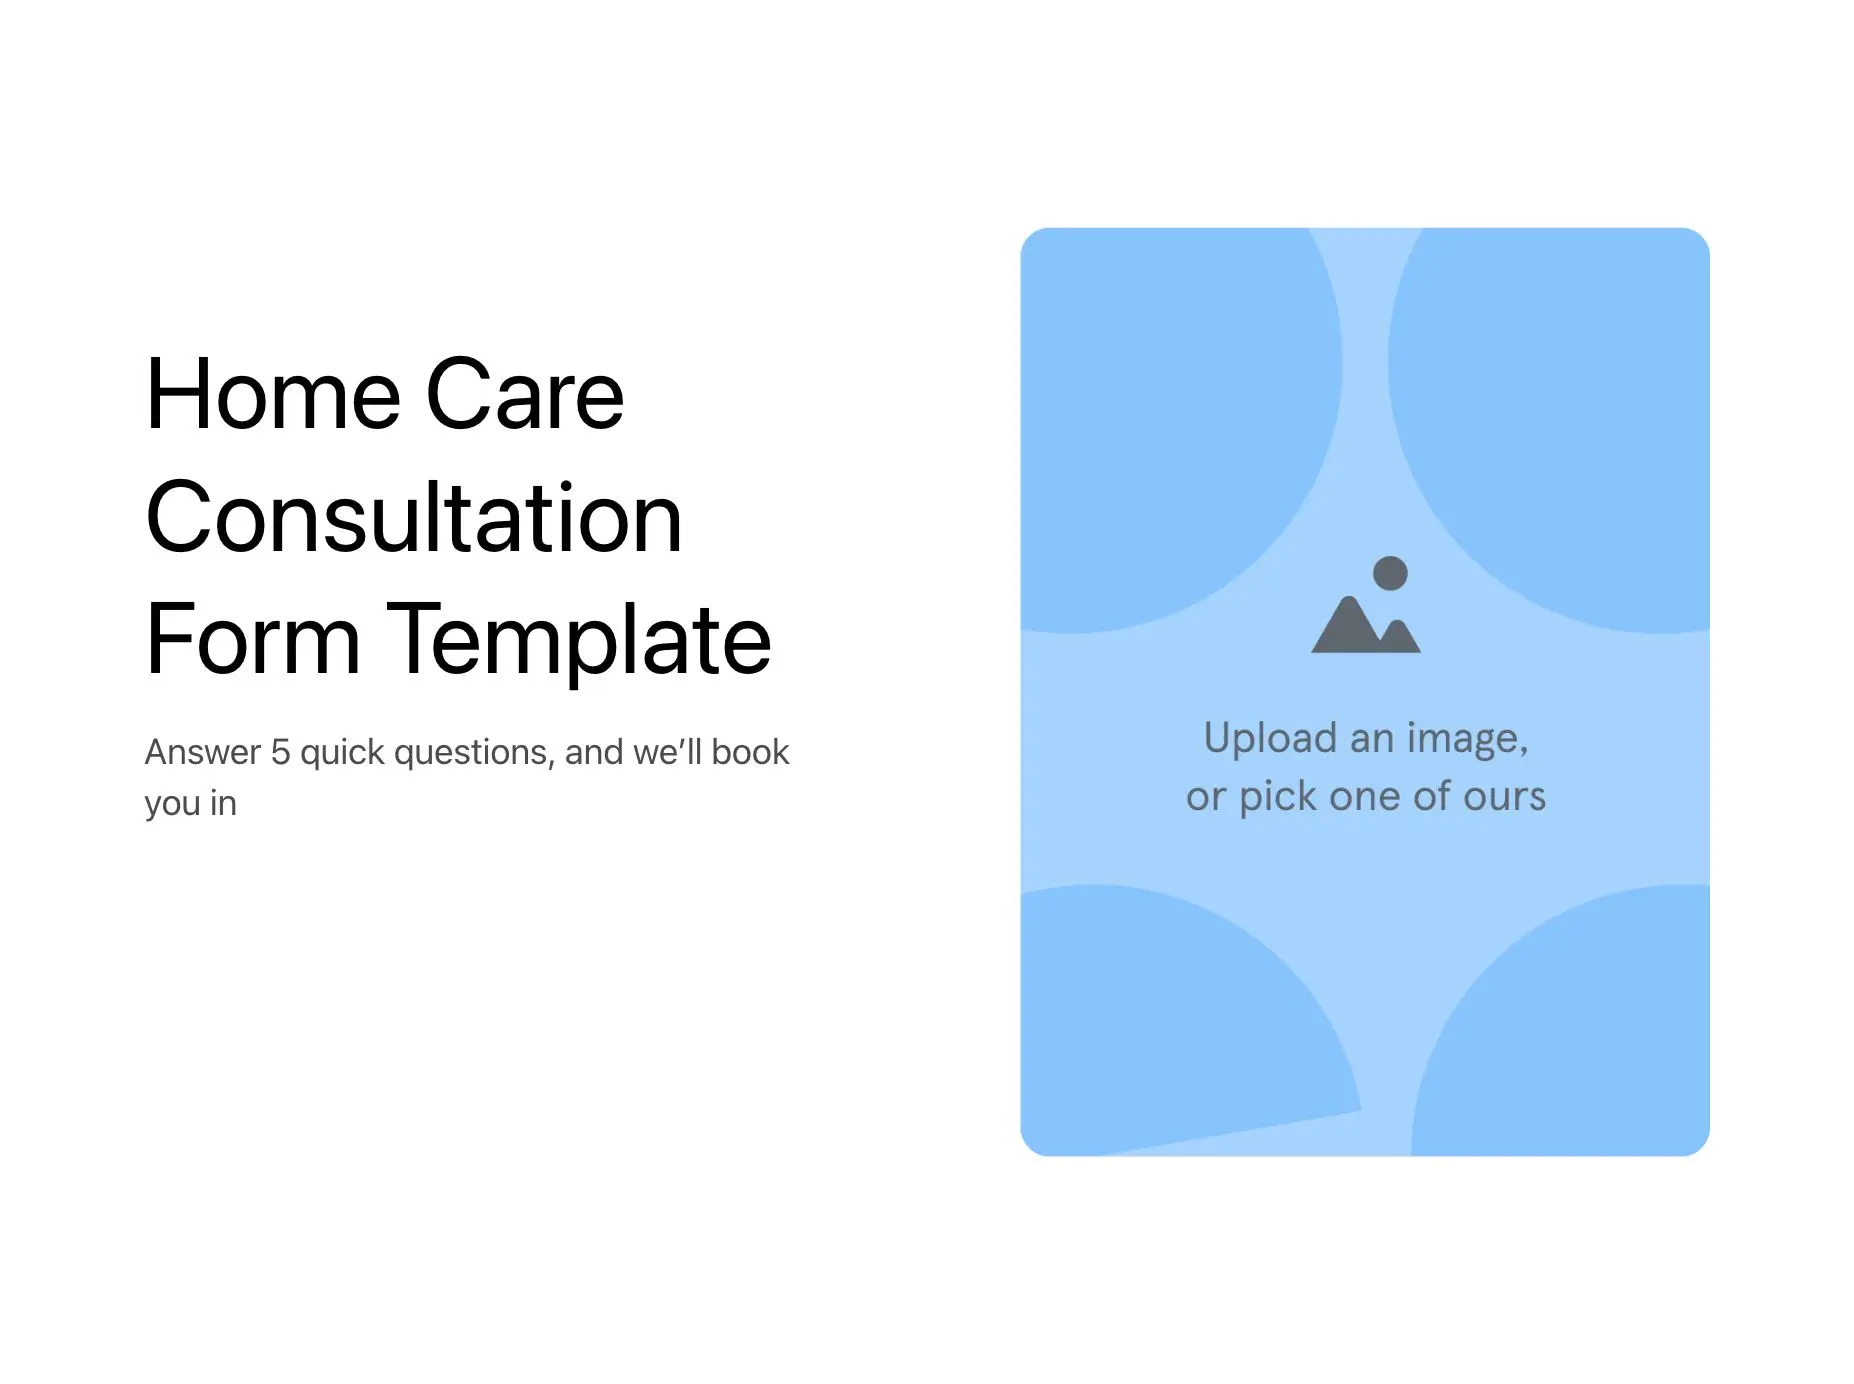 Home Care Consultation Form Template Hero